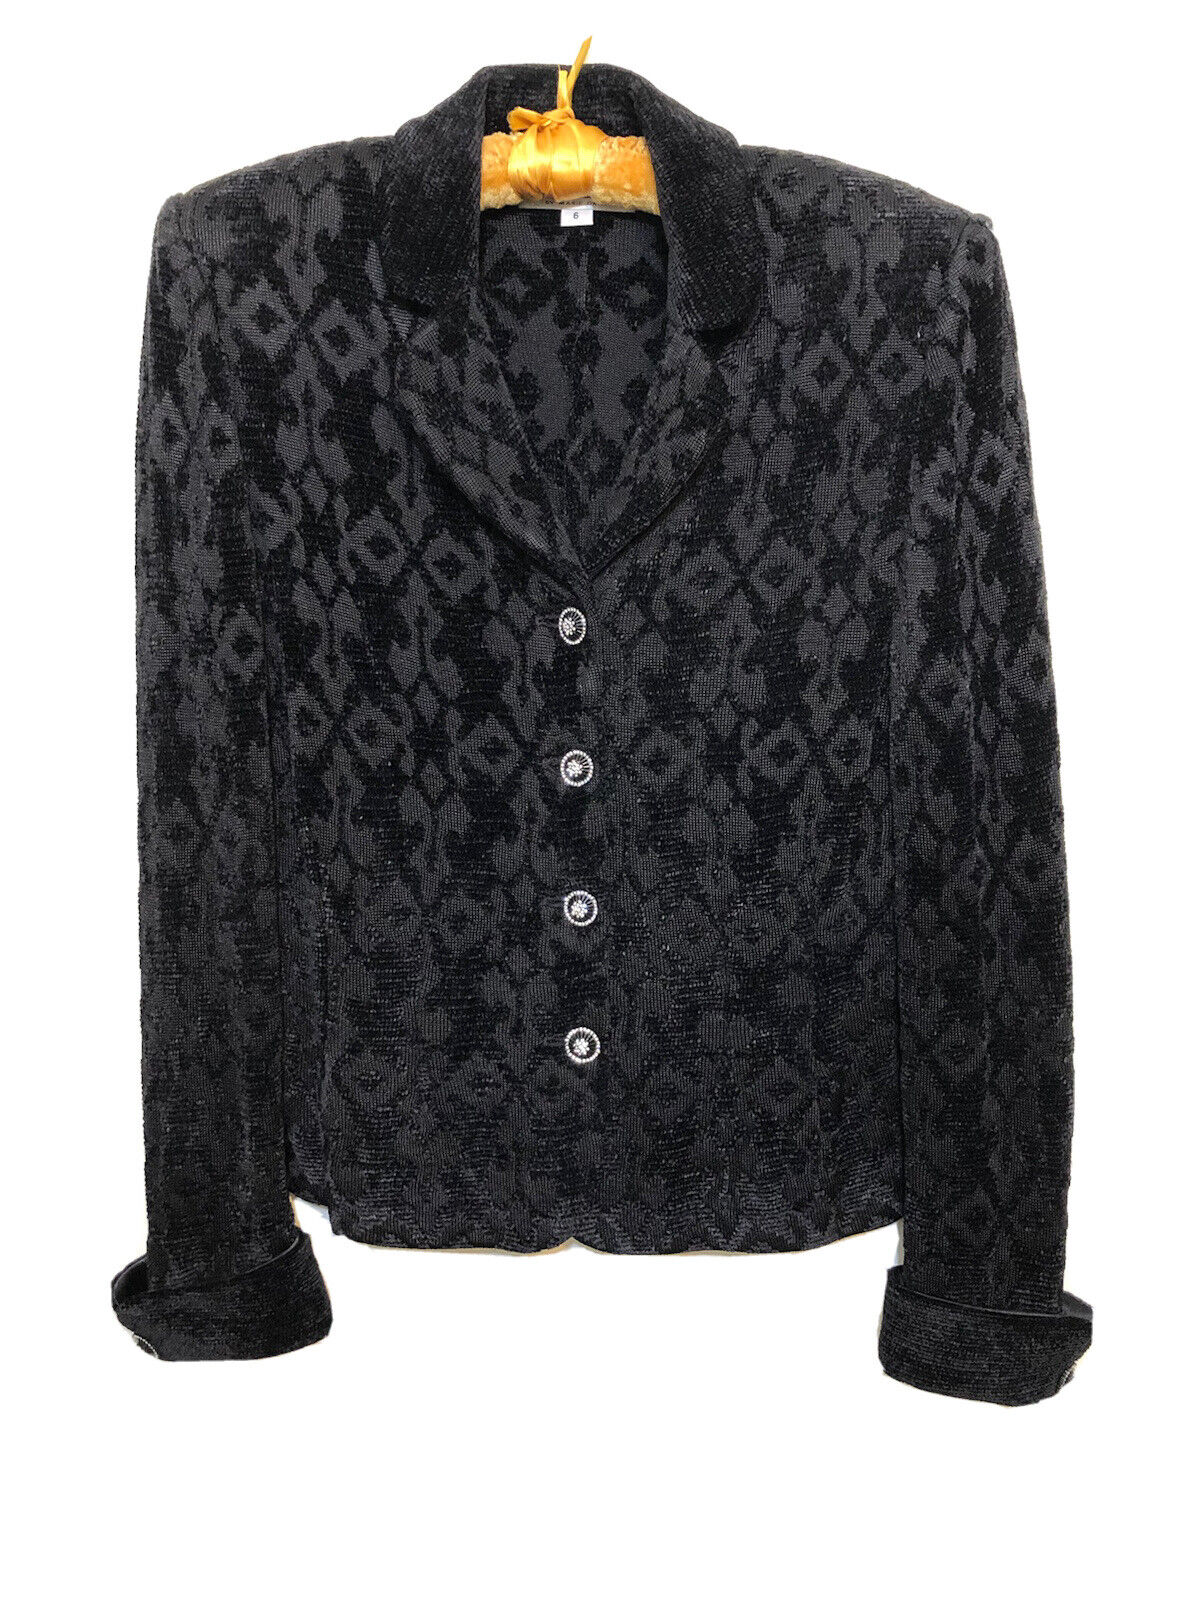 BEAUTIFUL Women’s  St John Evening Knit Black Jacket Only size 6 Jacquard